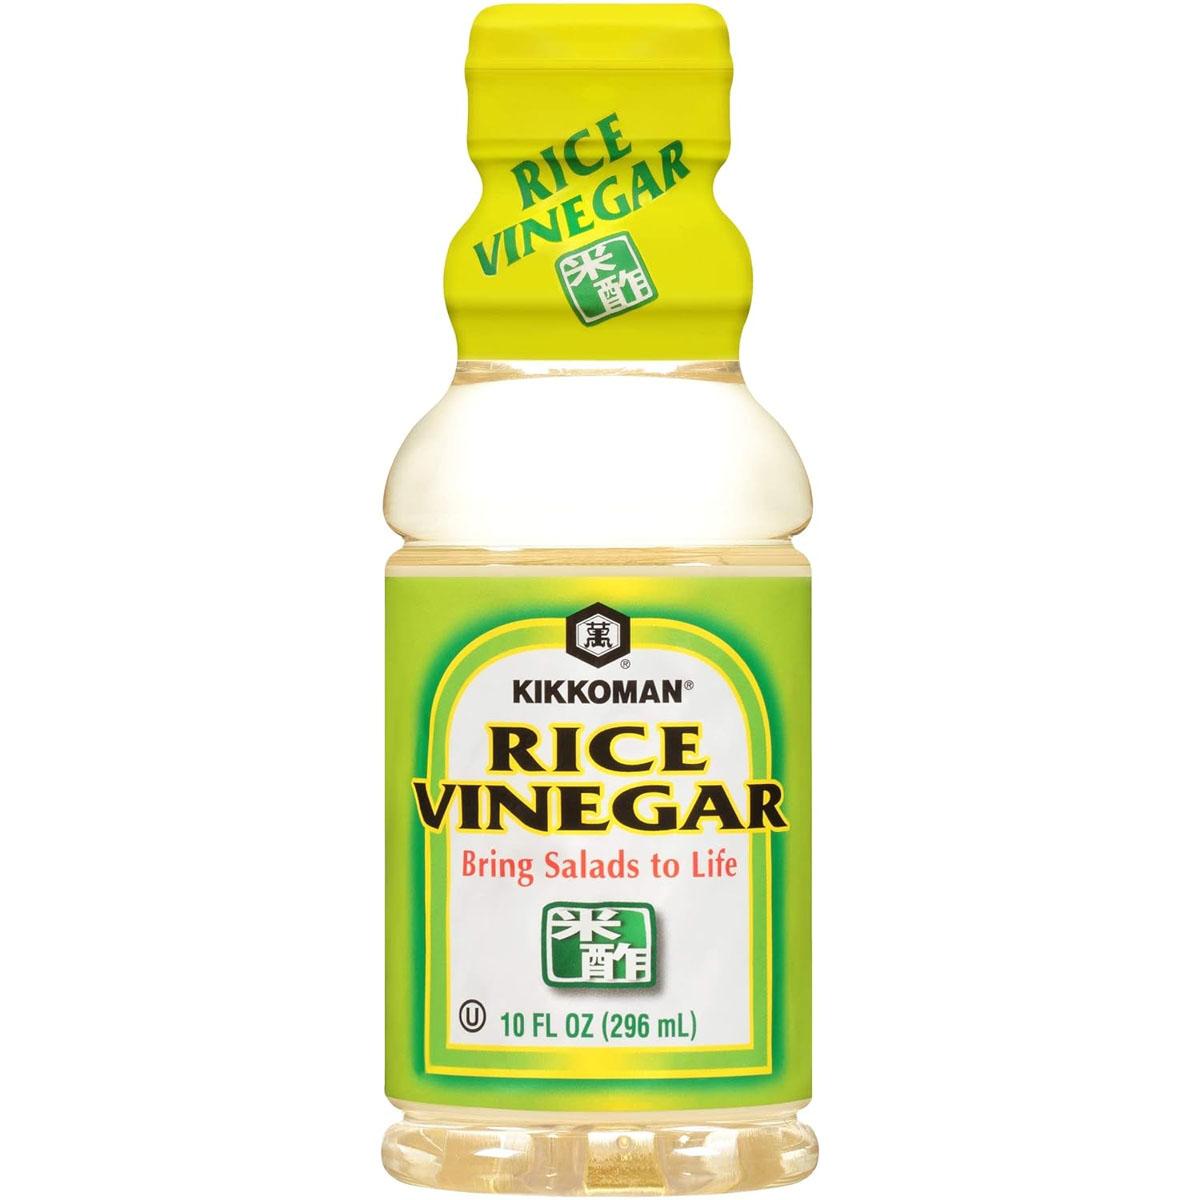 Kikkoman Rice Vinegar 10oz for $1.69 Shipped